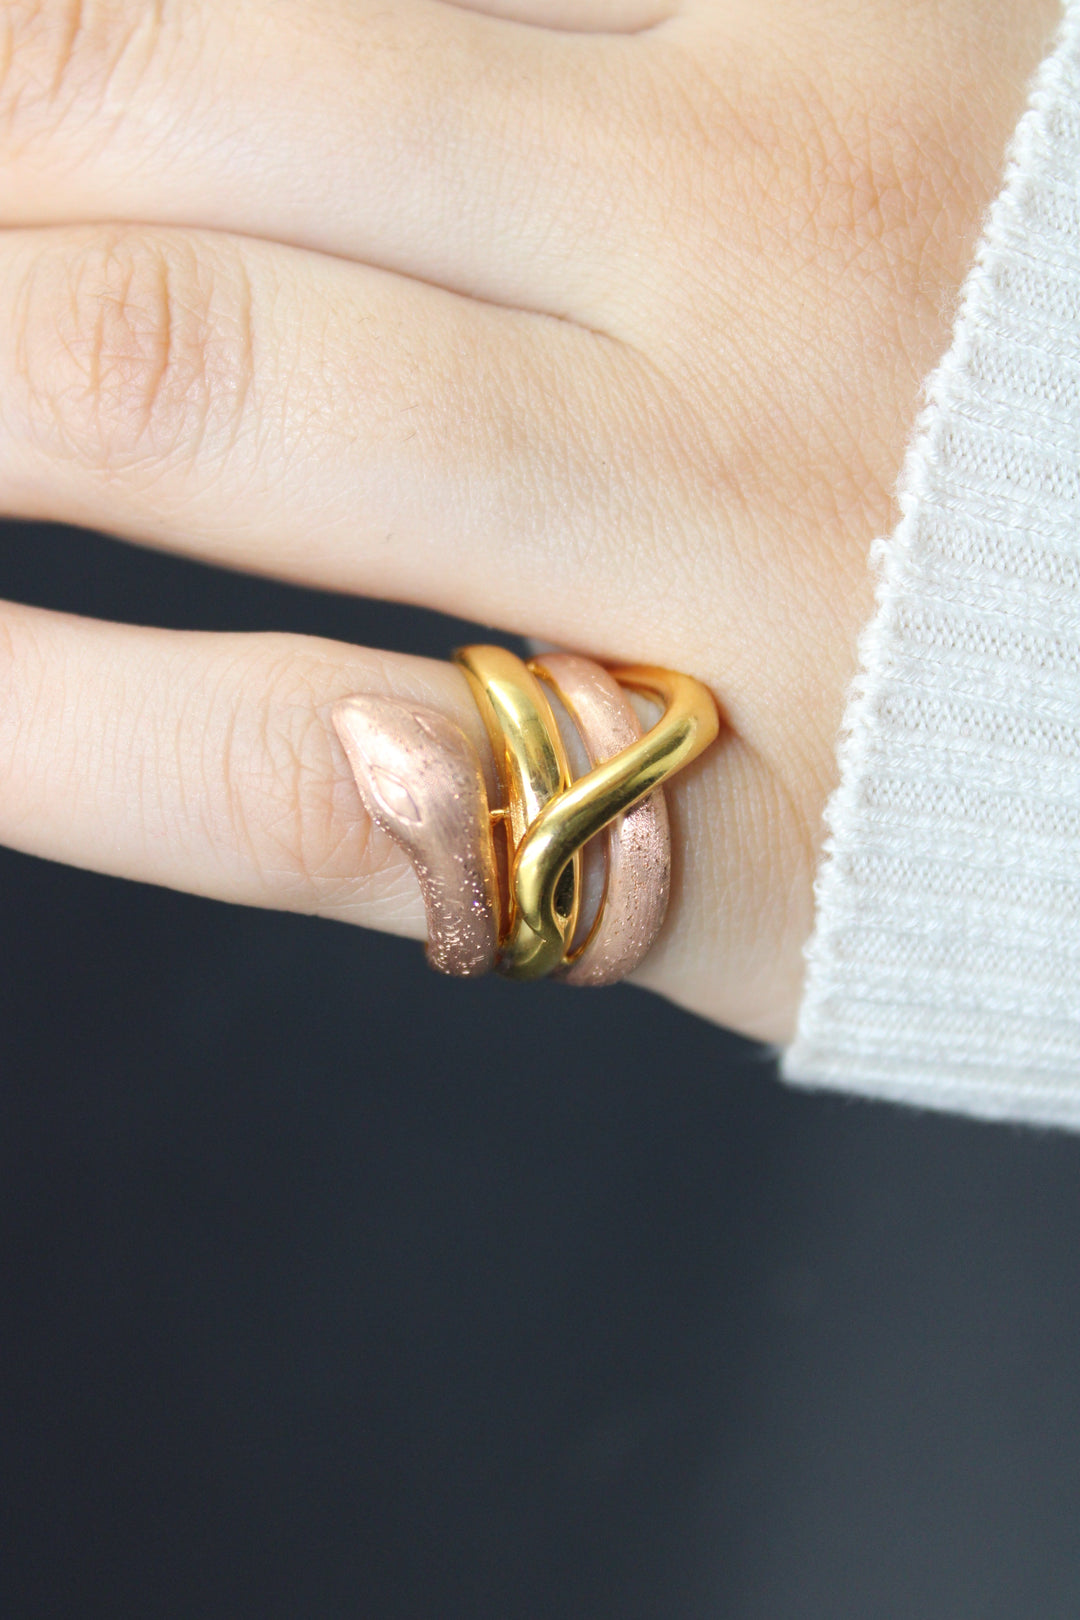 21K Gold Turkish snake Ring by Saeed Jewelry - Image 3